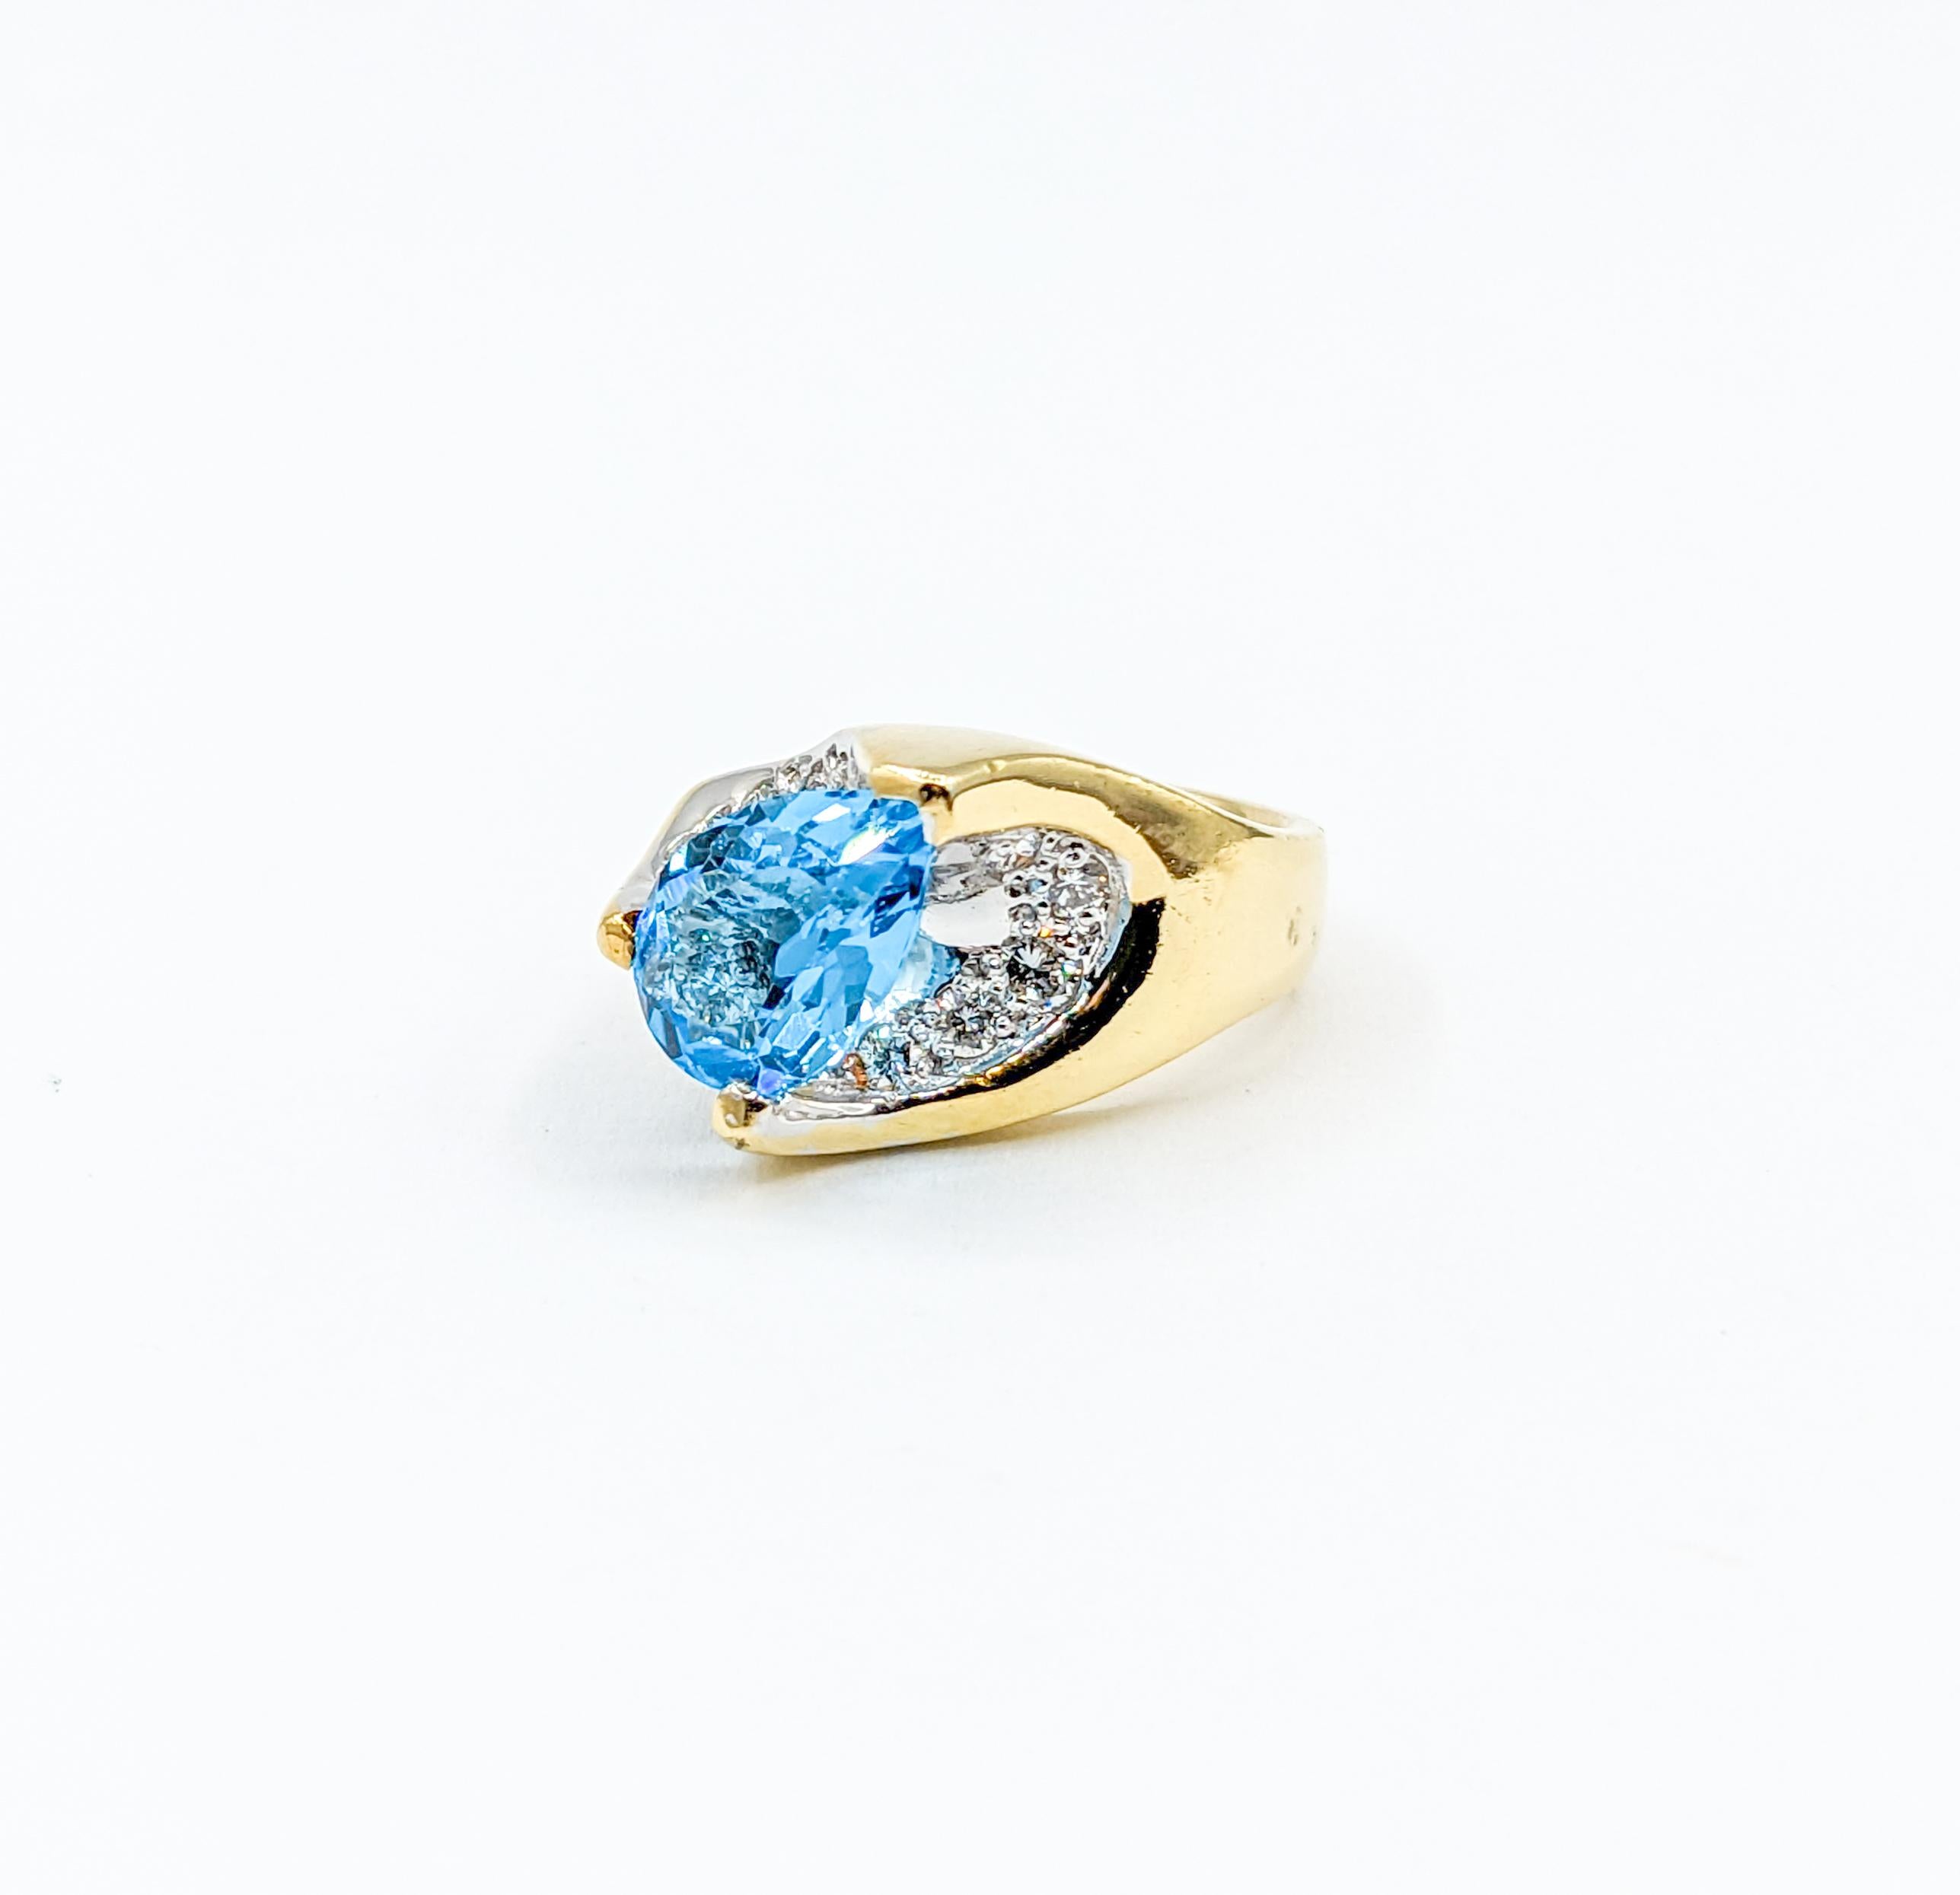 Artistic Blue Topaz & Diamond Cocktail Ring in 18k Gold For Sale 1